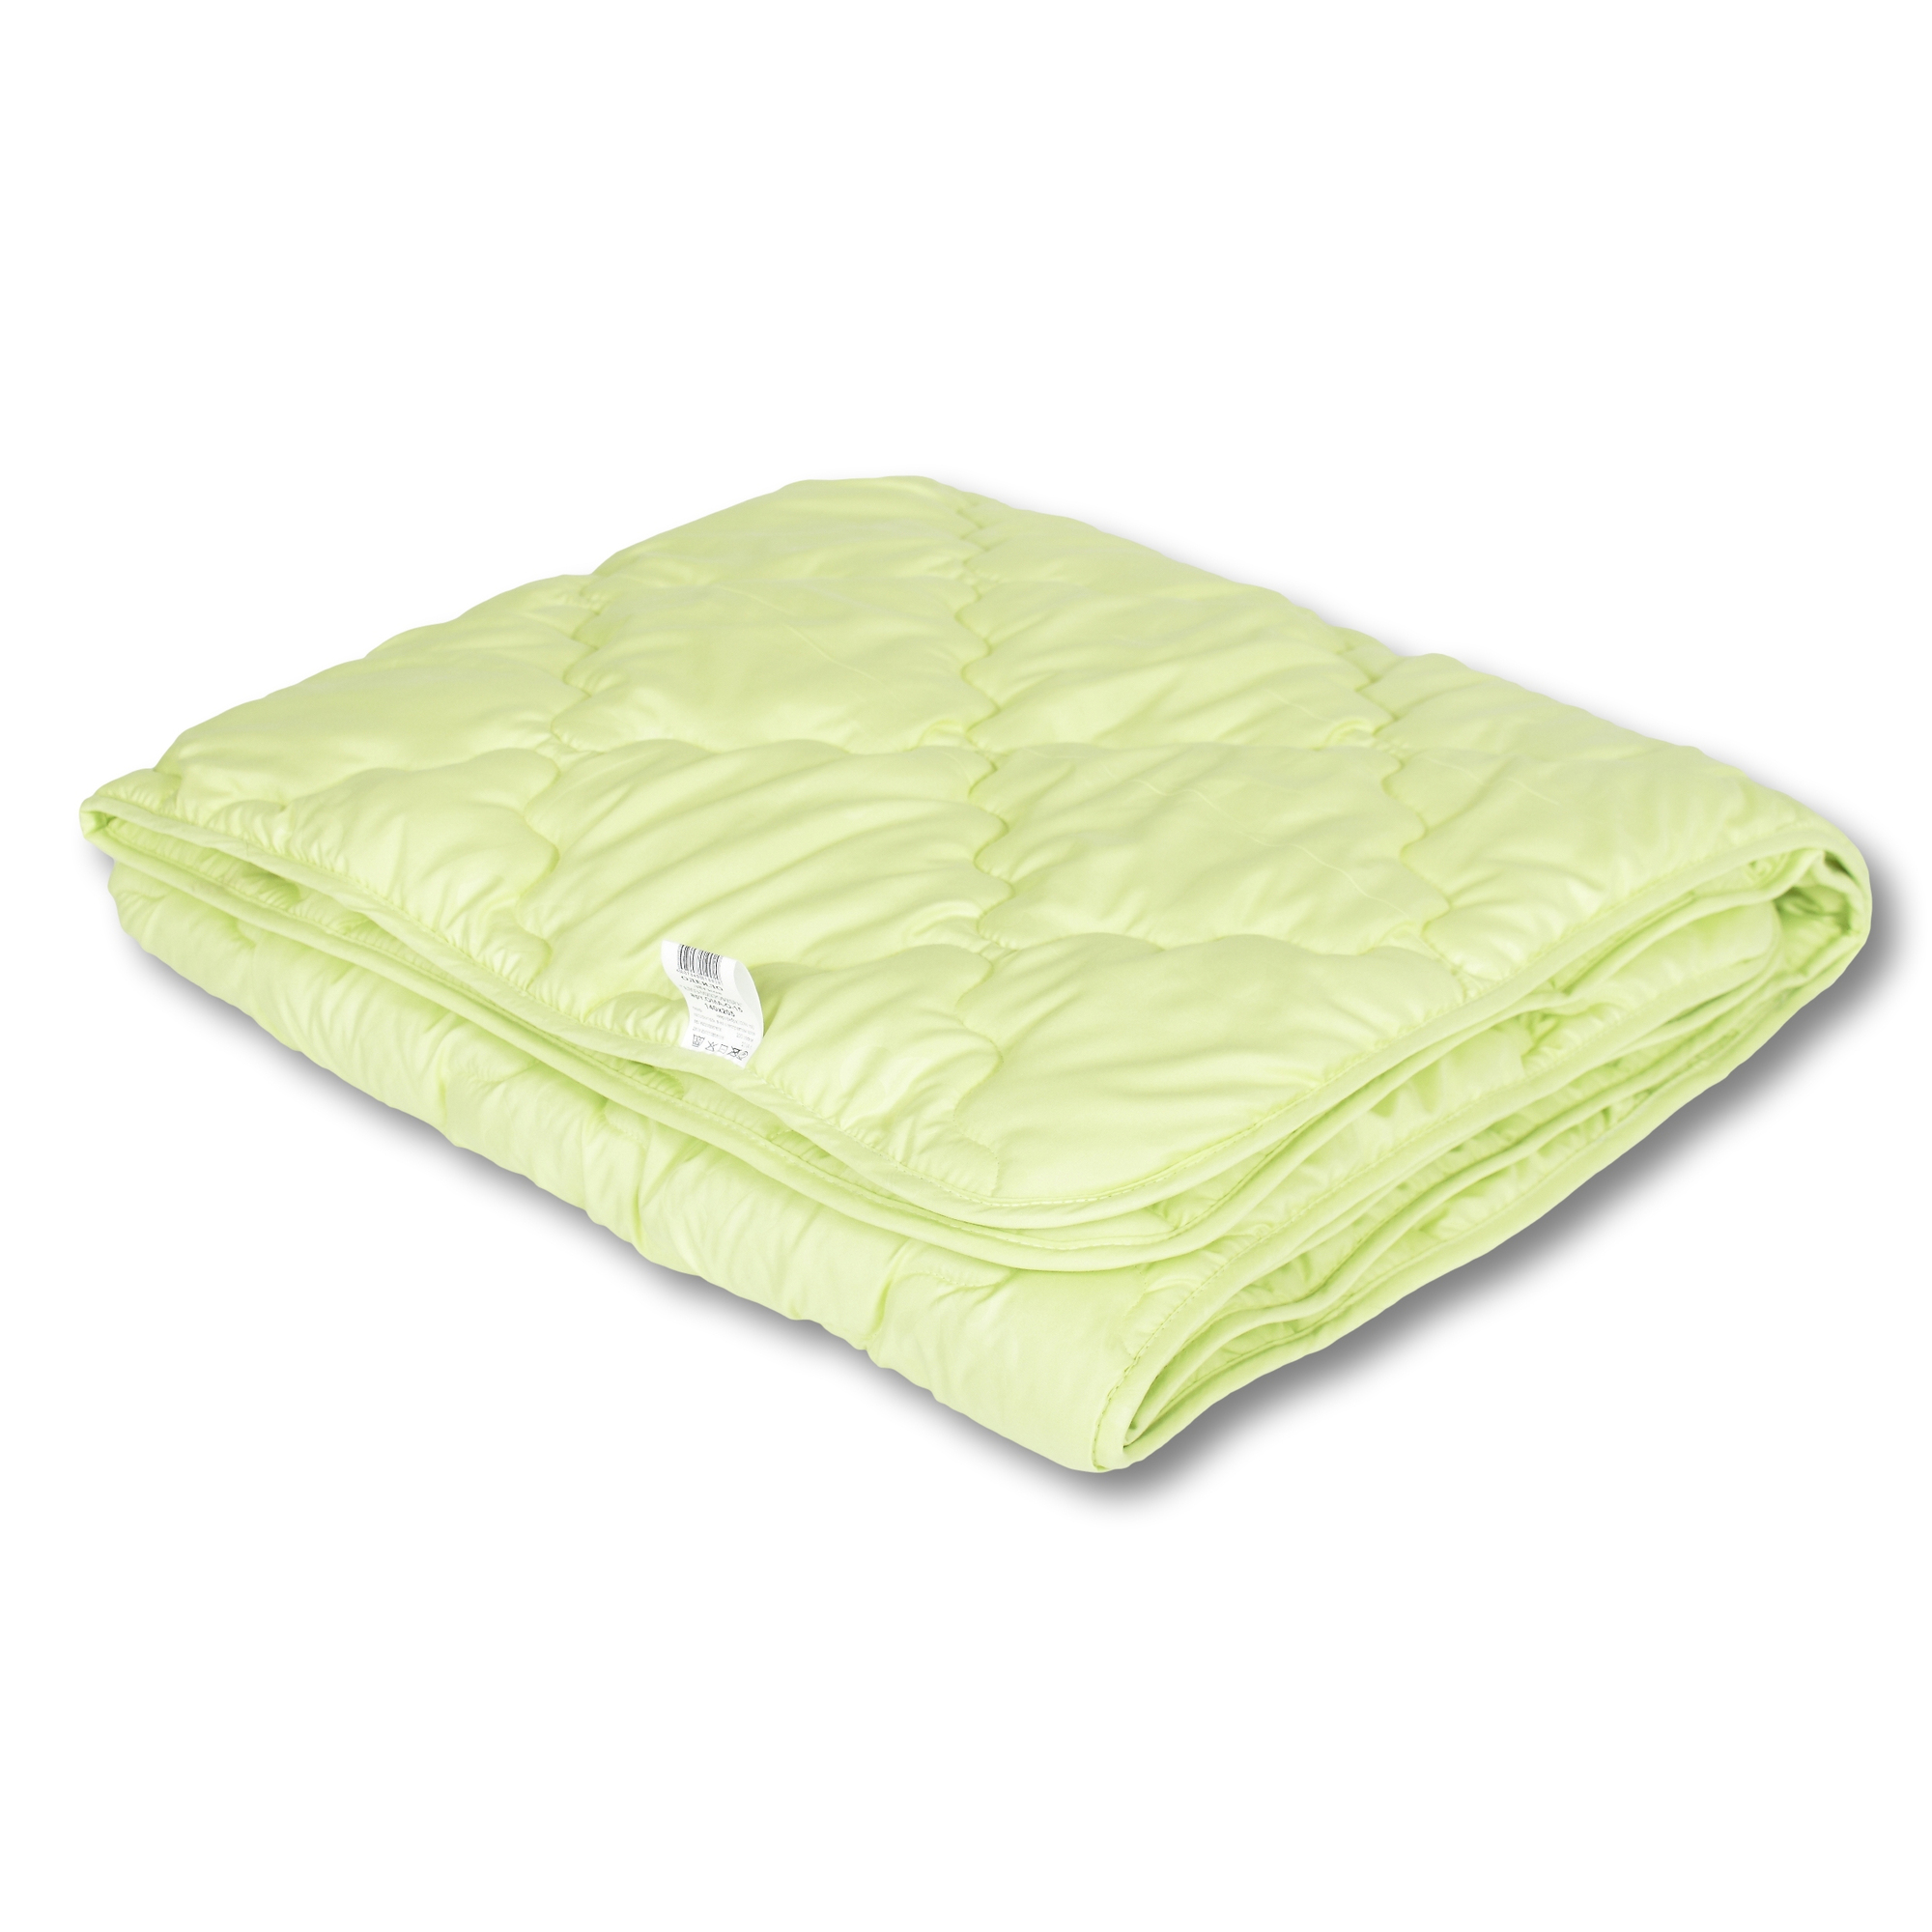 Одеяло Faustina Легкое (200х220 см), размер 200х220 см, цвет зеленый avt71985 Одеяло Faustina Легкое (200х220 см) - фото 1